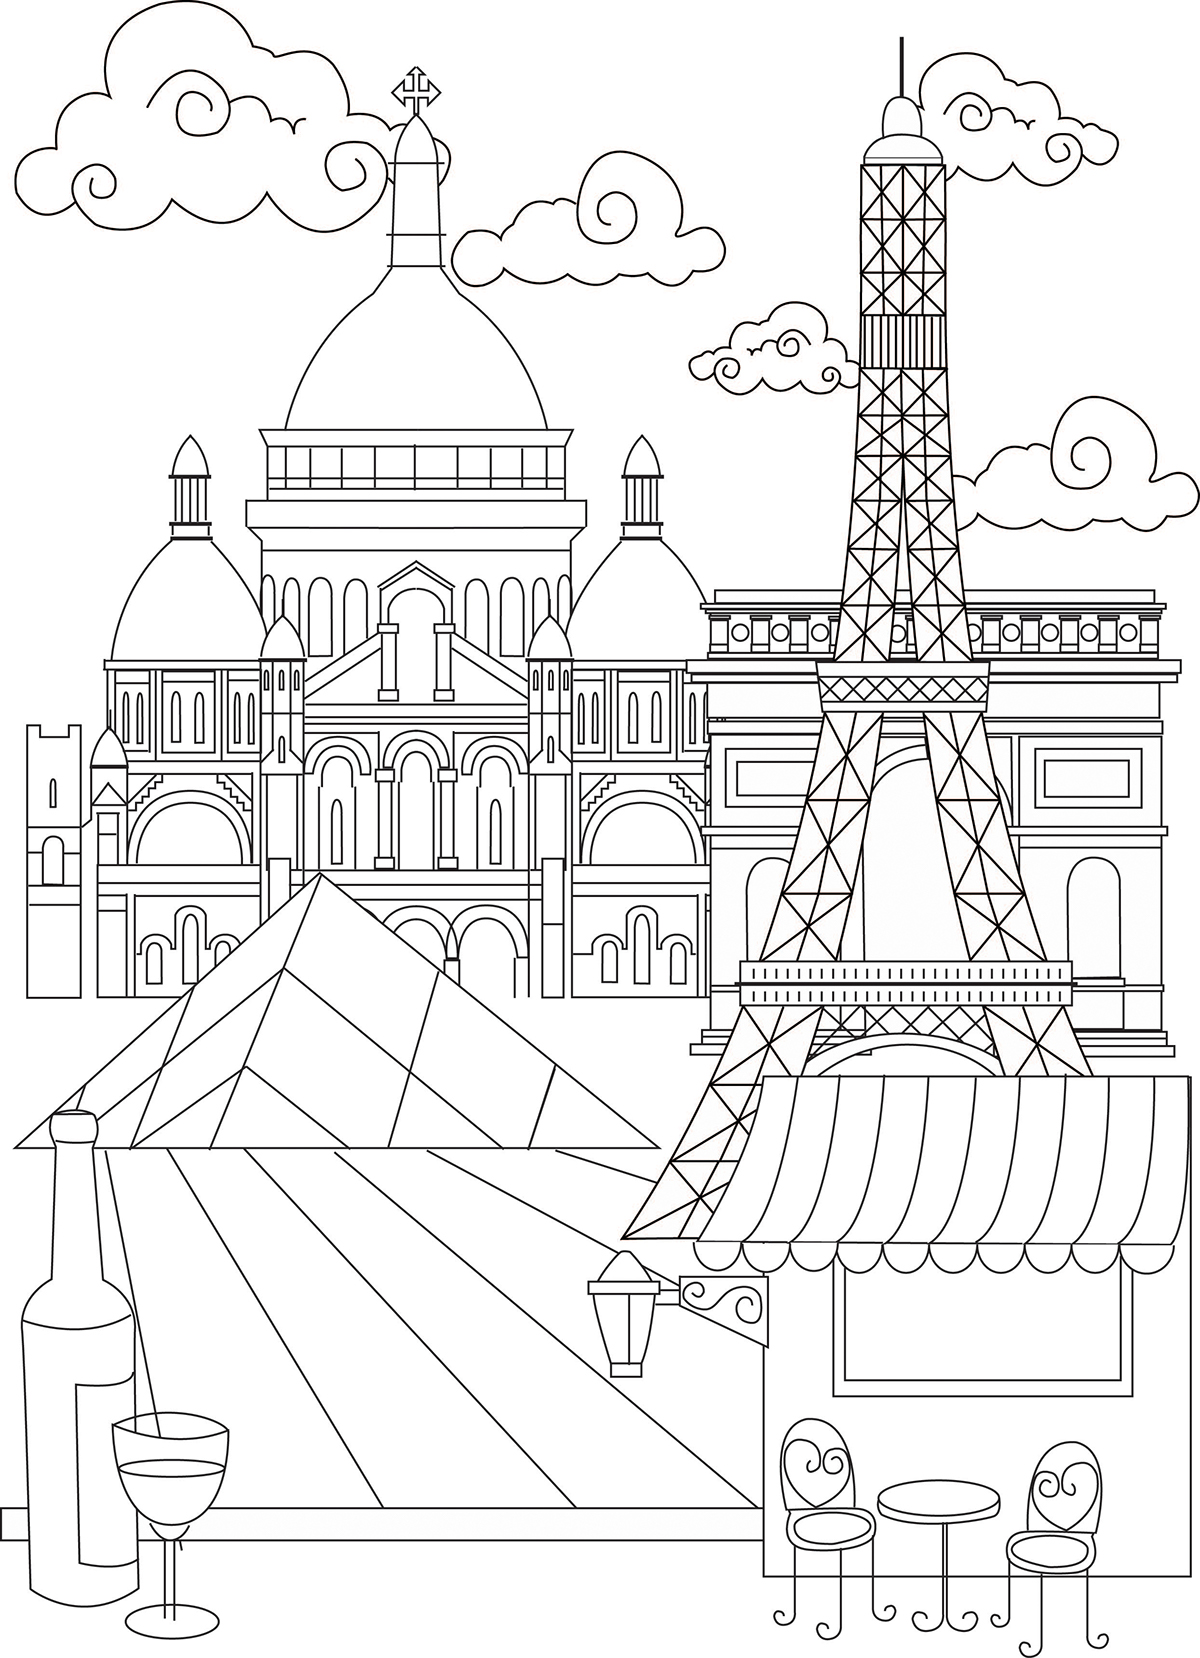 Cities icons line drawing minimal London Paris New yourk tokyo New Delhi MUMBAI bombay Delhi popular culture